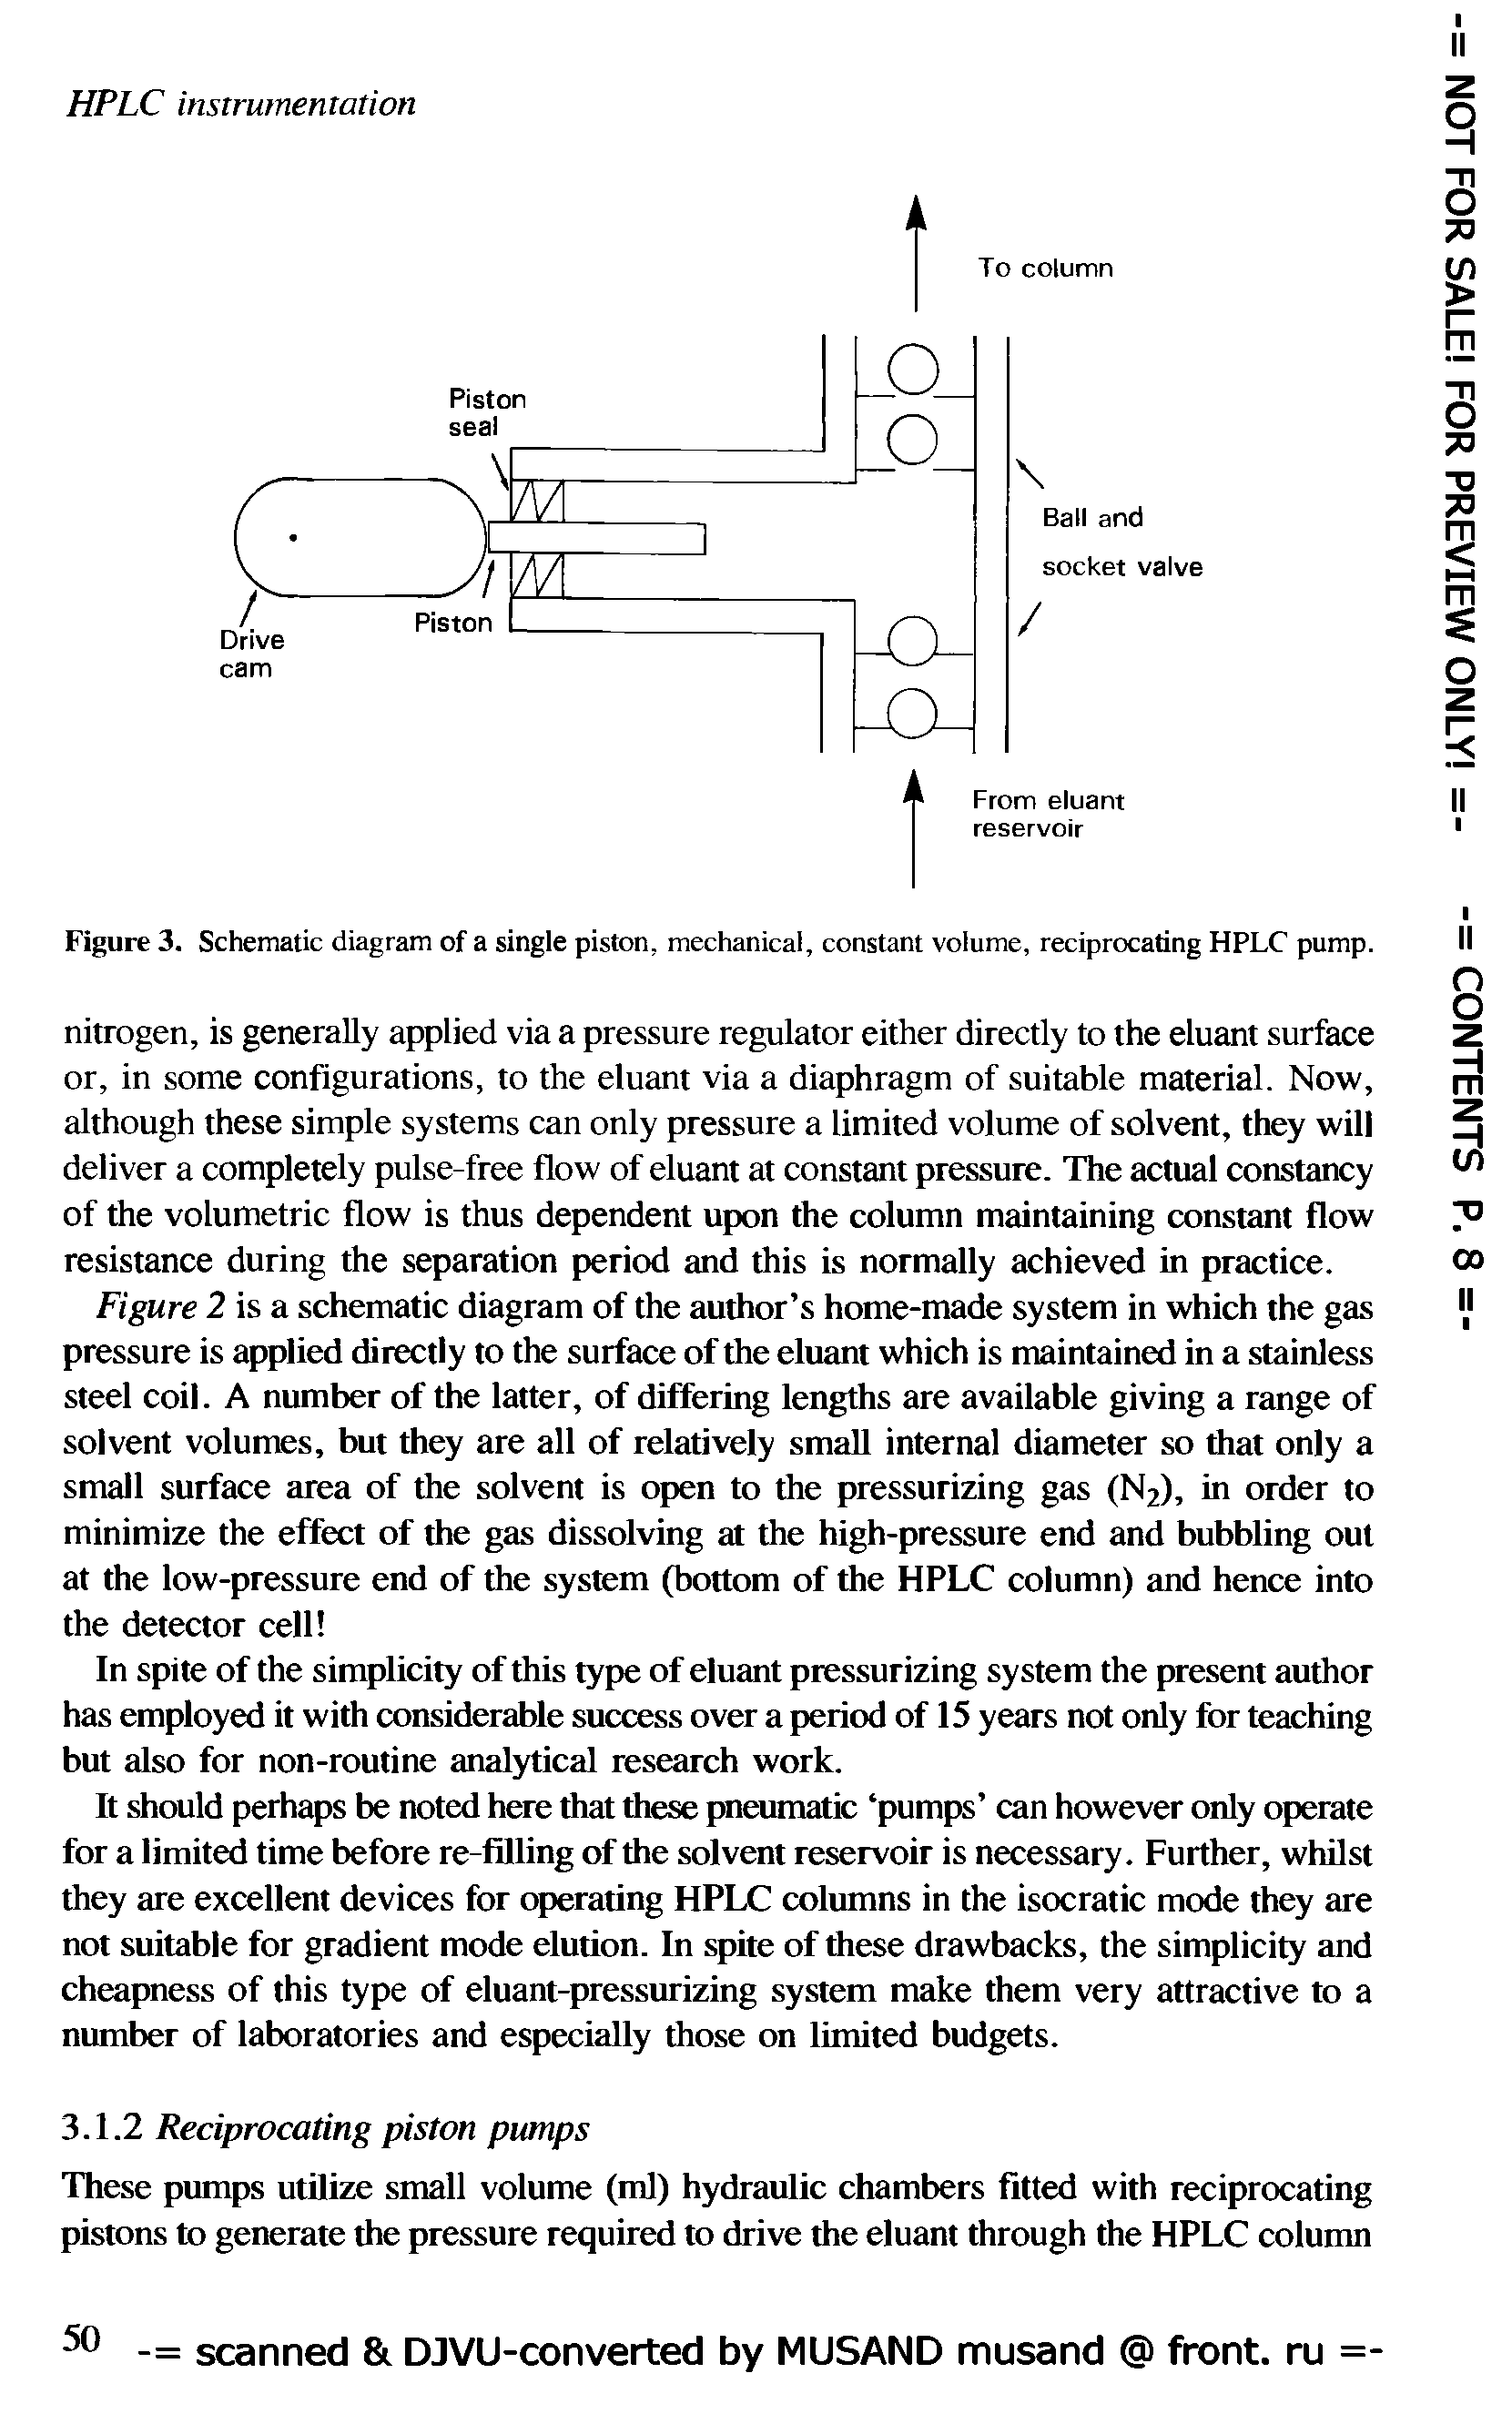 Figure 3. Schematic diagram of a single piston, mechanical, constant volume, reciprocating HPLC pump.